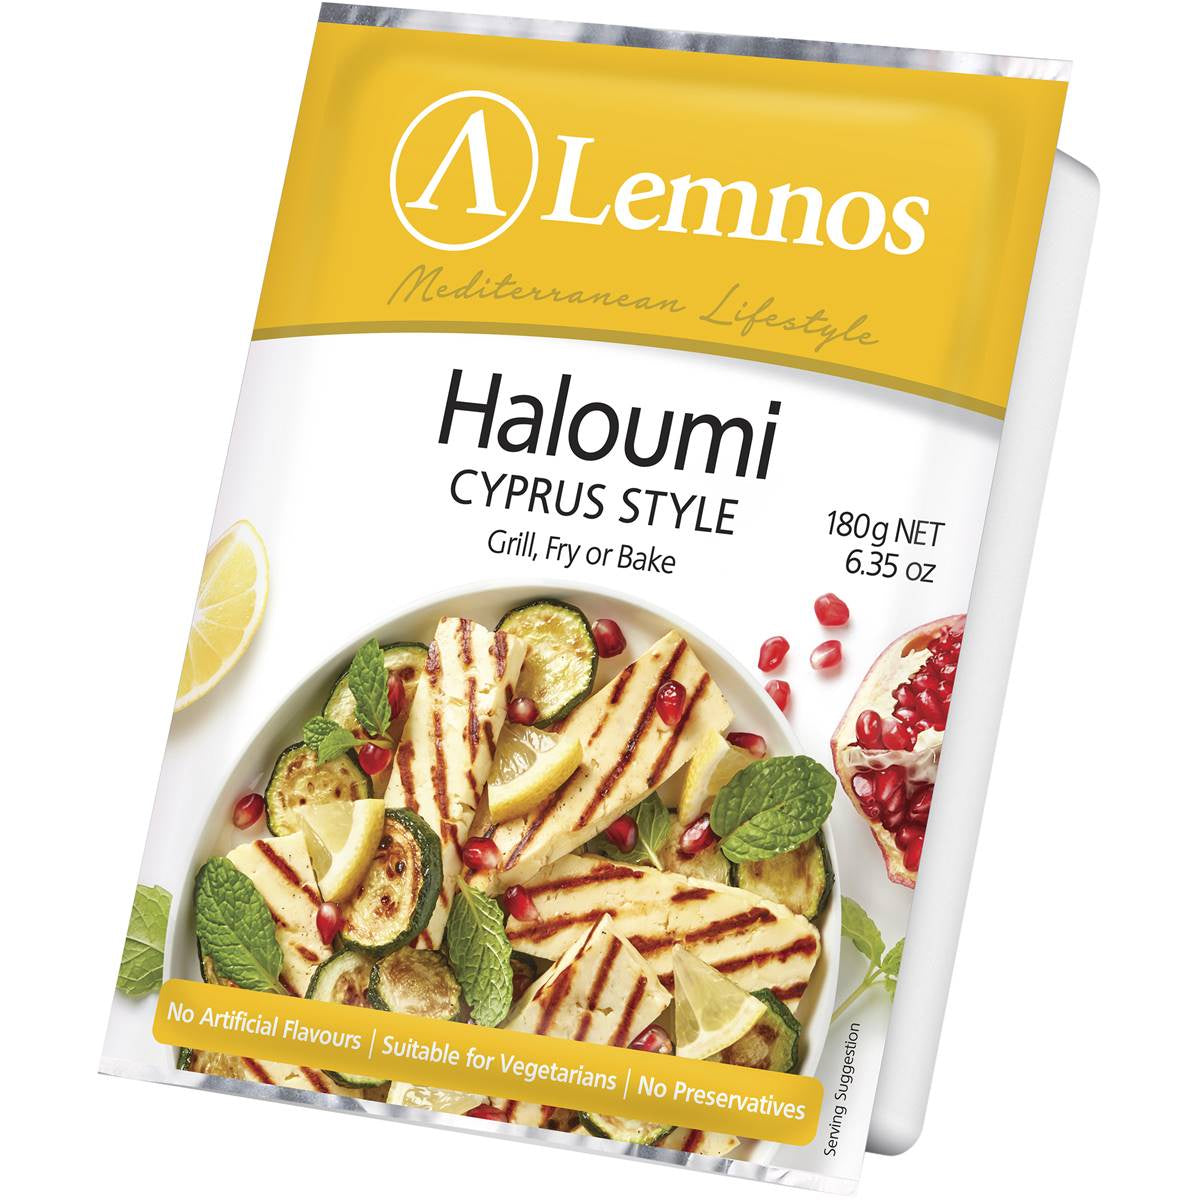 Lemnos Haloumi Cyprus Style Cheese 180g